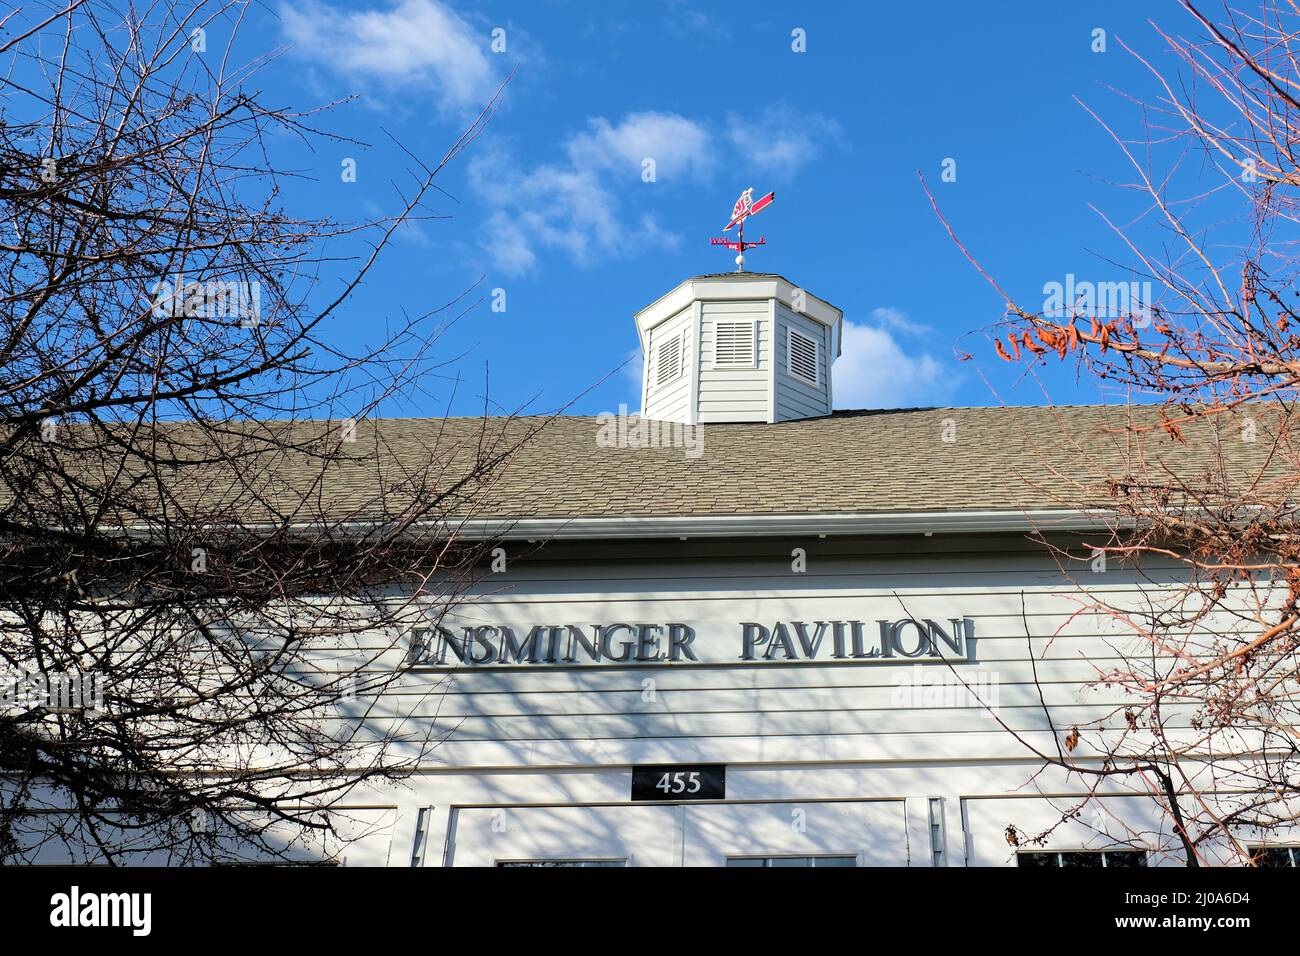 Washington State University’s Ensminger Pavilion, a former livestock-judging barn built in 1933 turned a modern events center, with WSU weathervane. Stock Photo